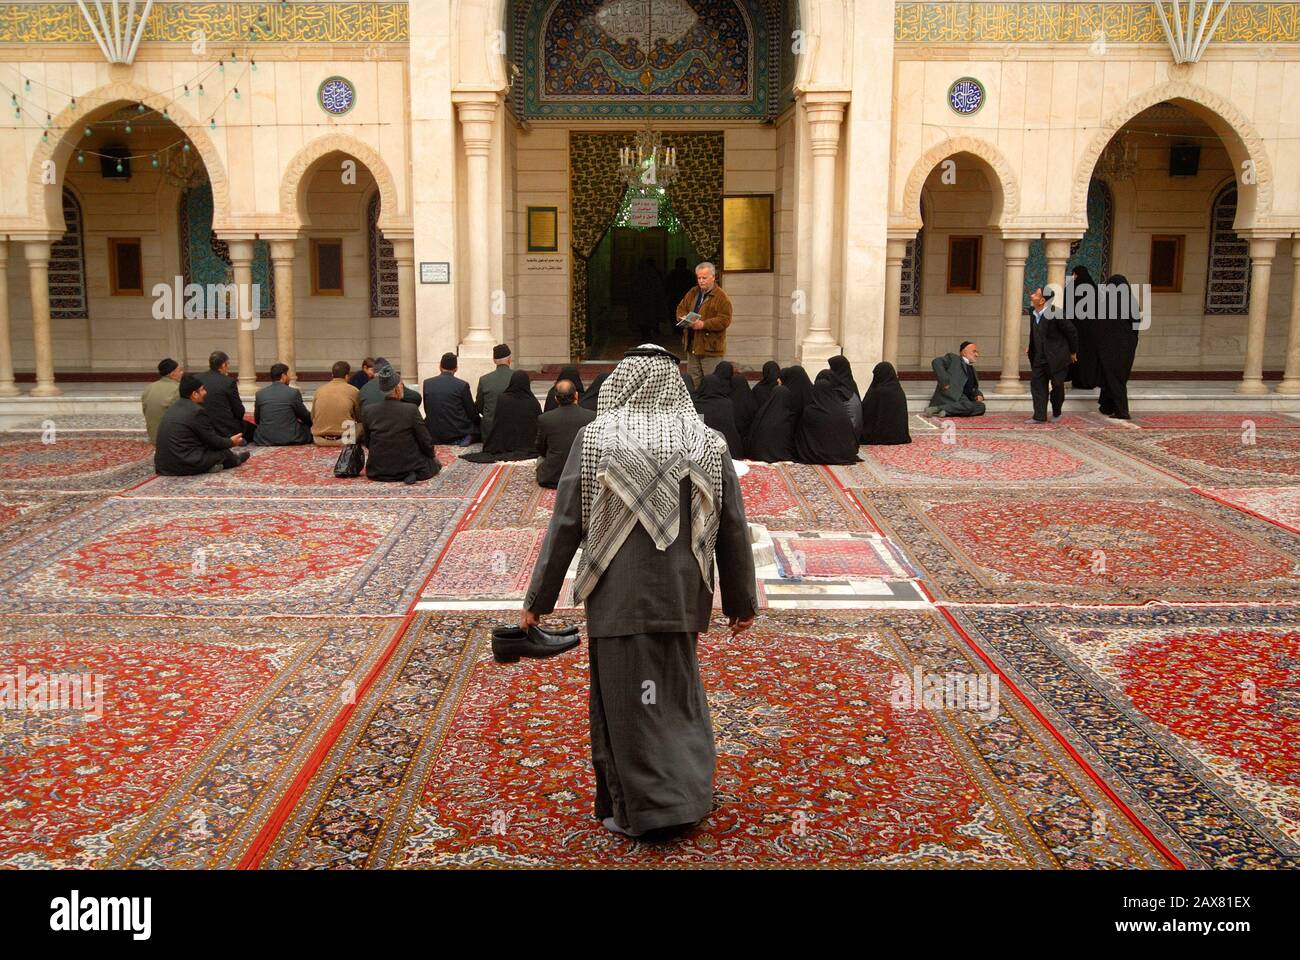 Iranian pilgrims sitting in the courtyard of the Sayyoda Ruqayya Mosque, Damascus, Syria. Stock Photo